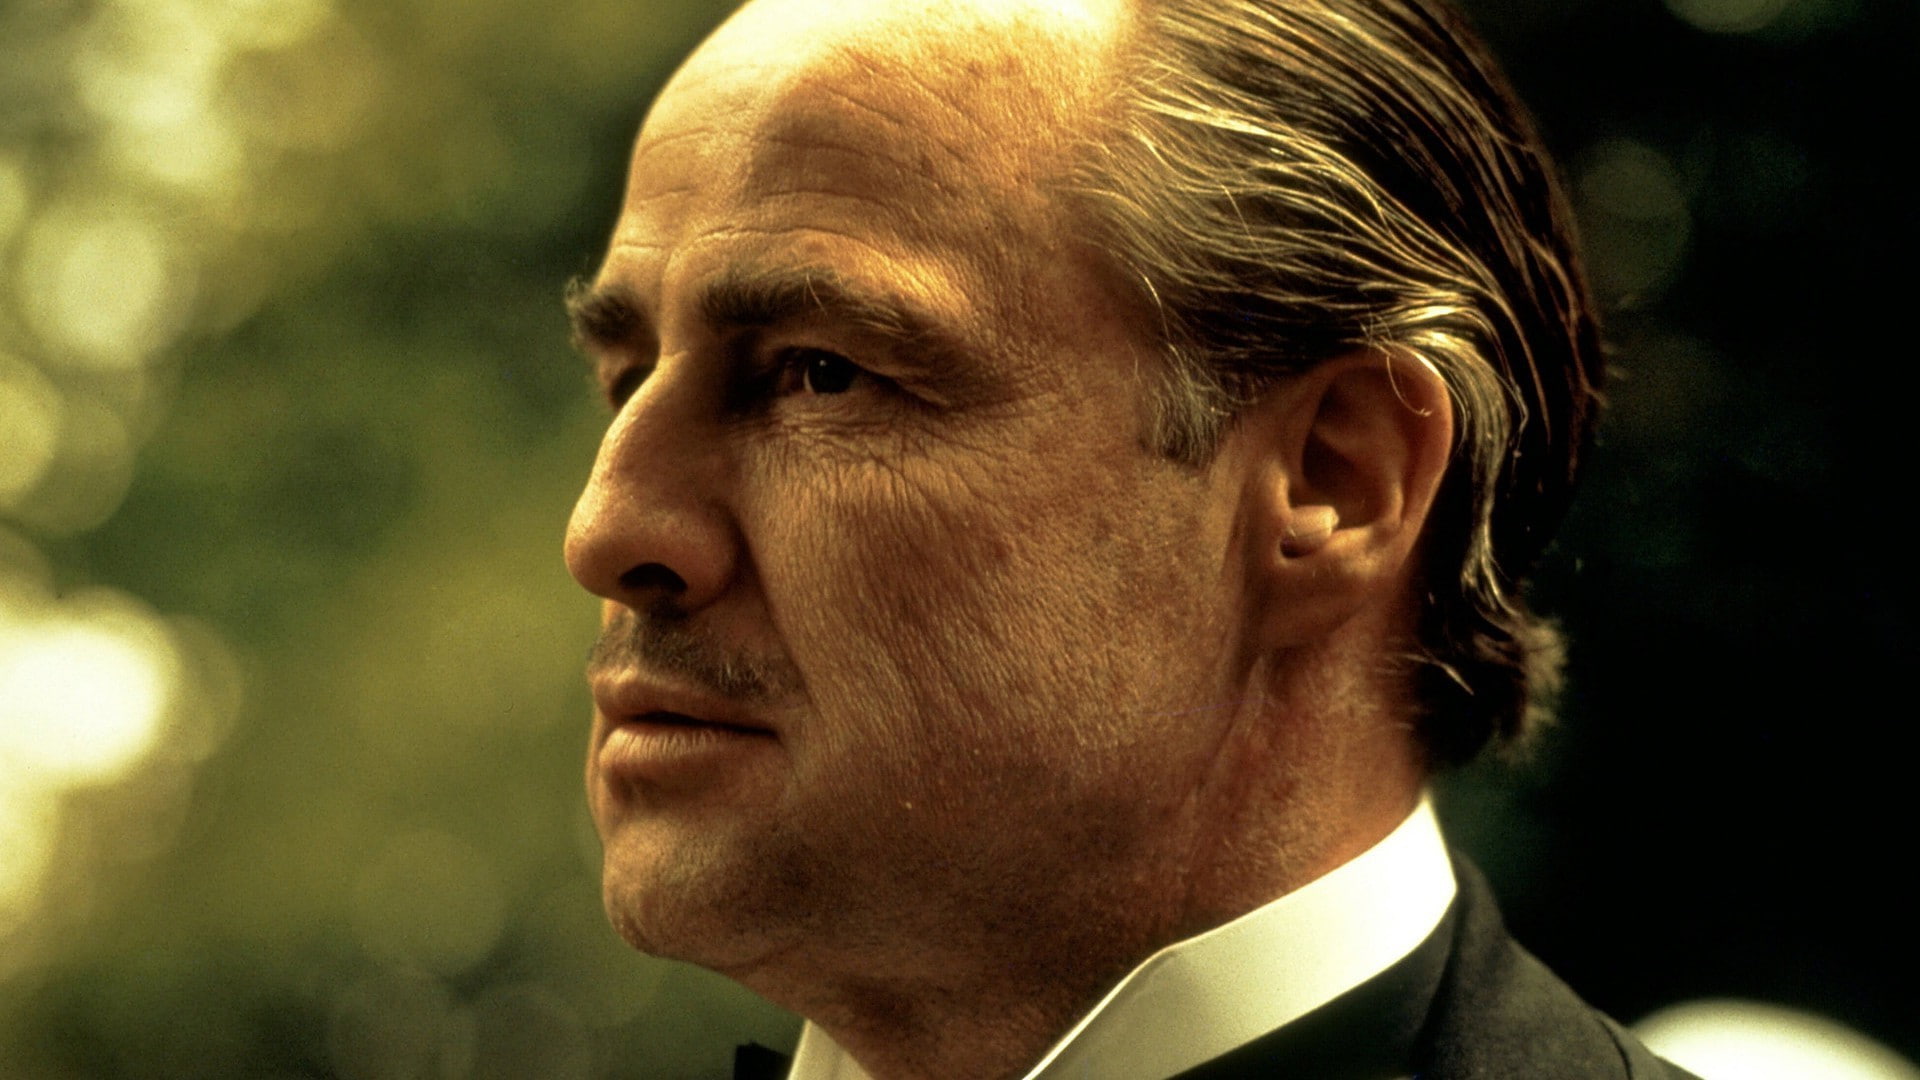 movies the godfather vito corleone, portrait, one person, headshot